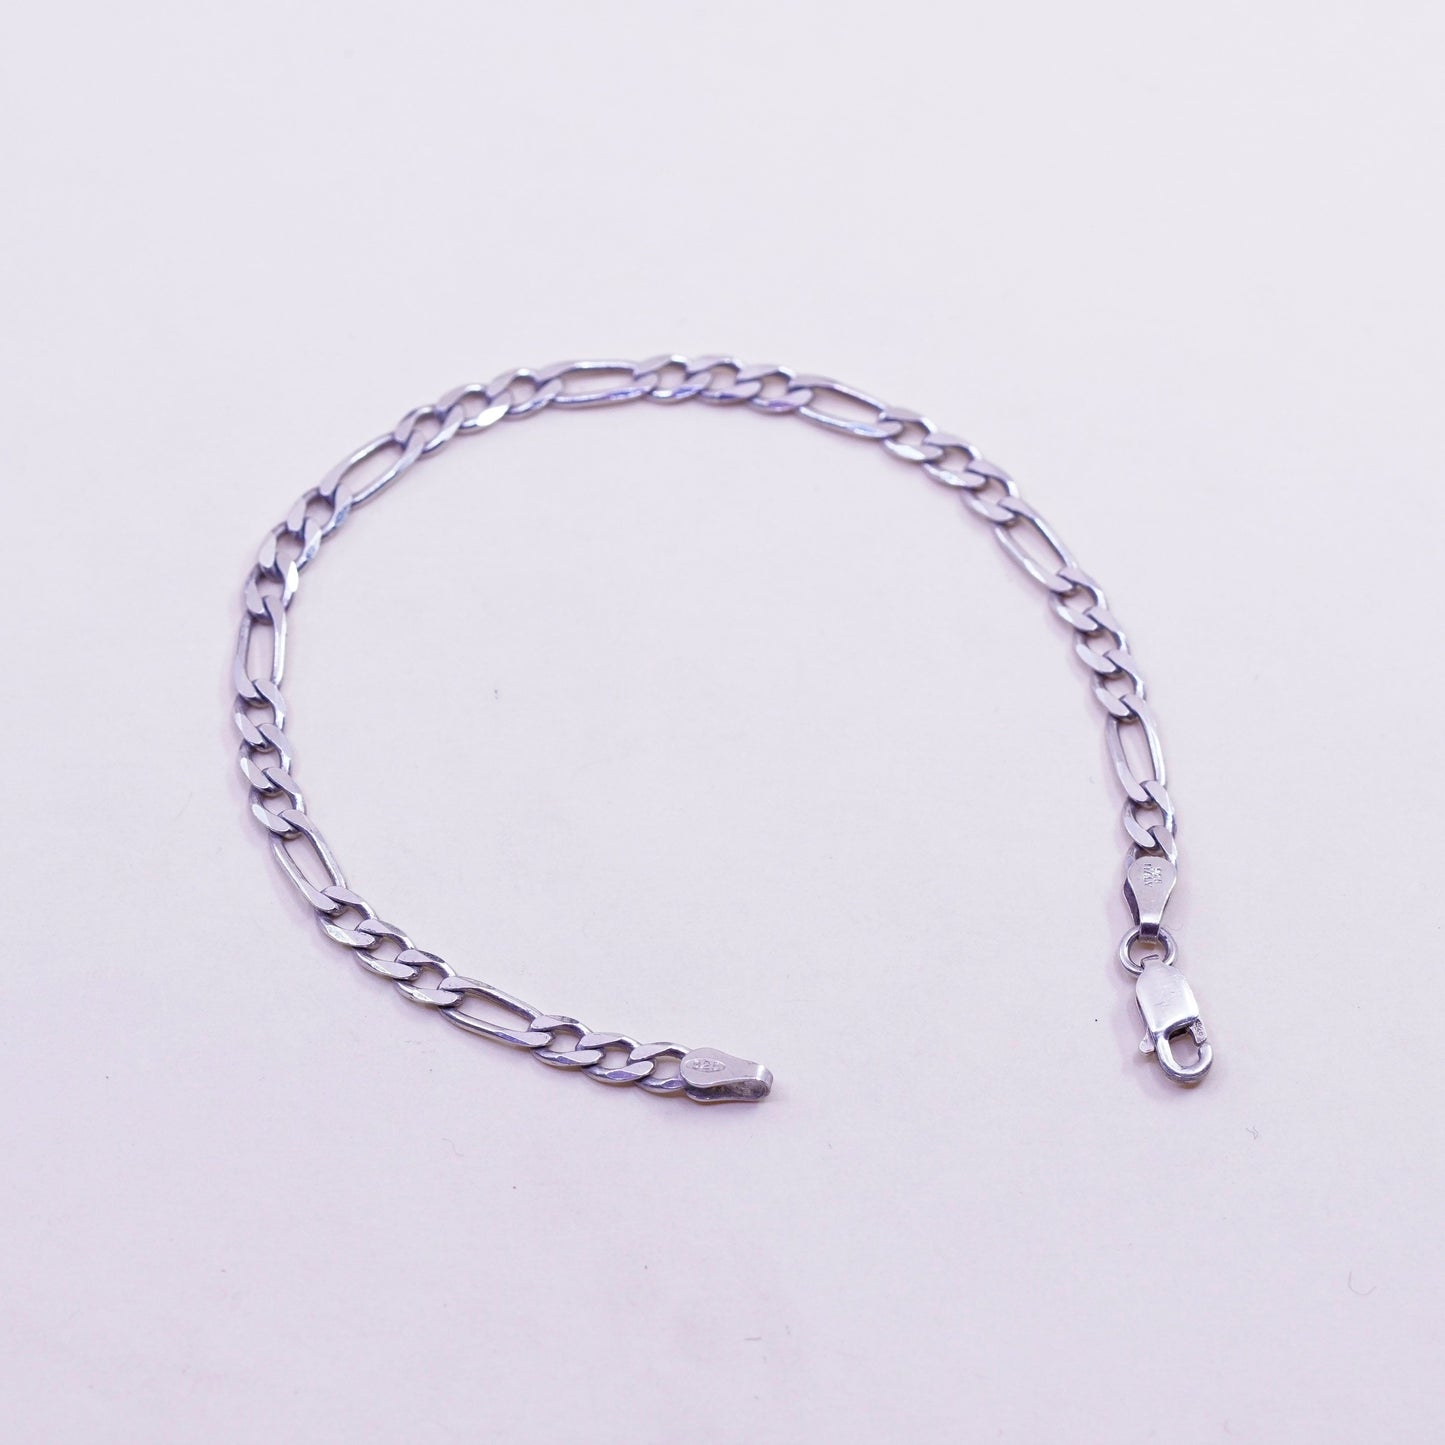 7”, 4mm, Vintage Italy sterling silver 925 chain, men’s figaro bracelet